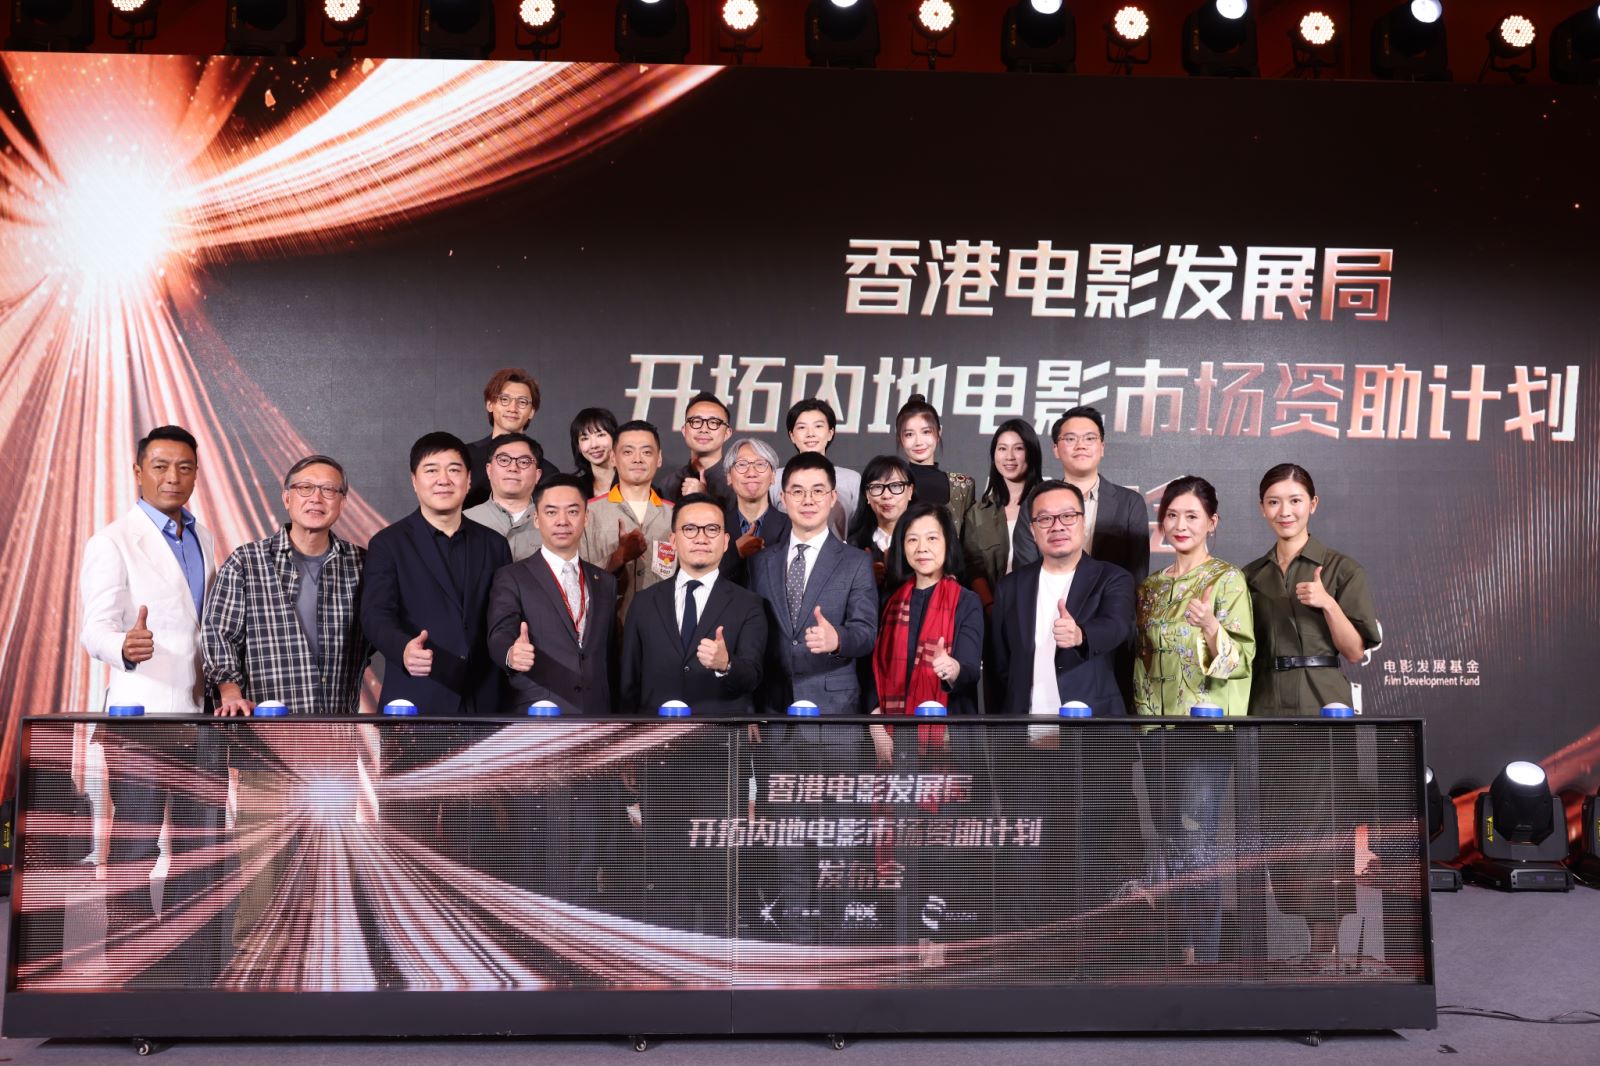 Hong Kong Film Development Council and Create Hong Kong Launch Film Financing Scheme for Mainland Market at 14th Beijing International Film Festival (with photos)